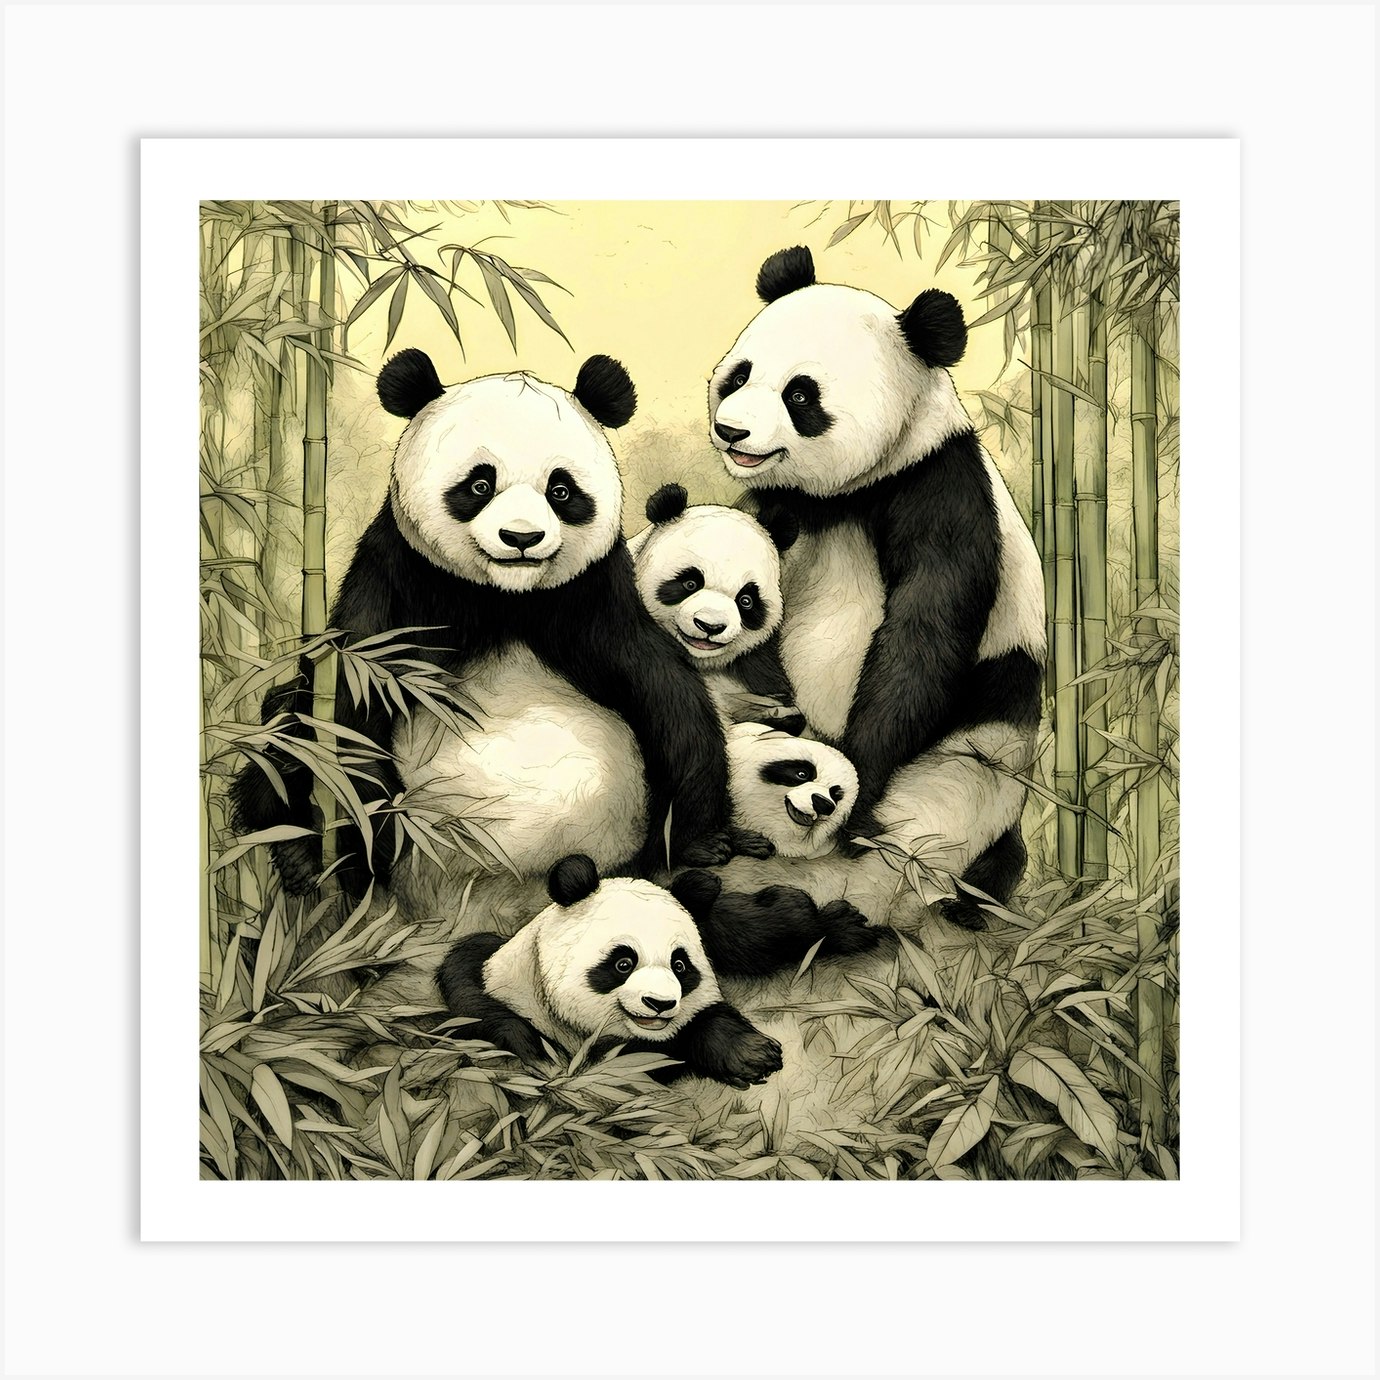 Panda Family Art Print by Jan Morris - Fy